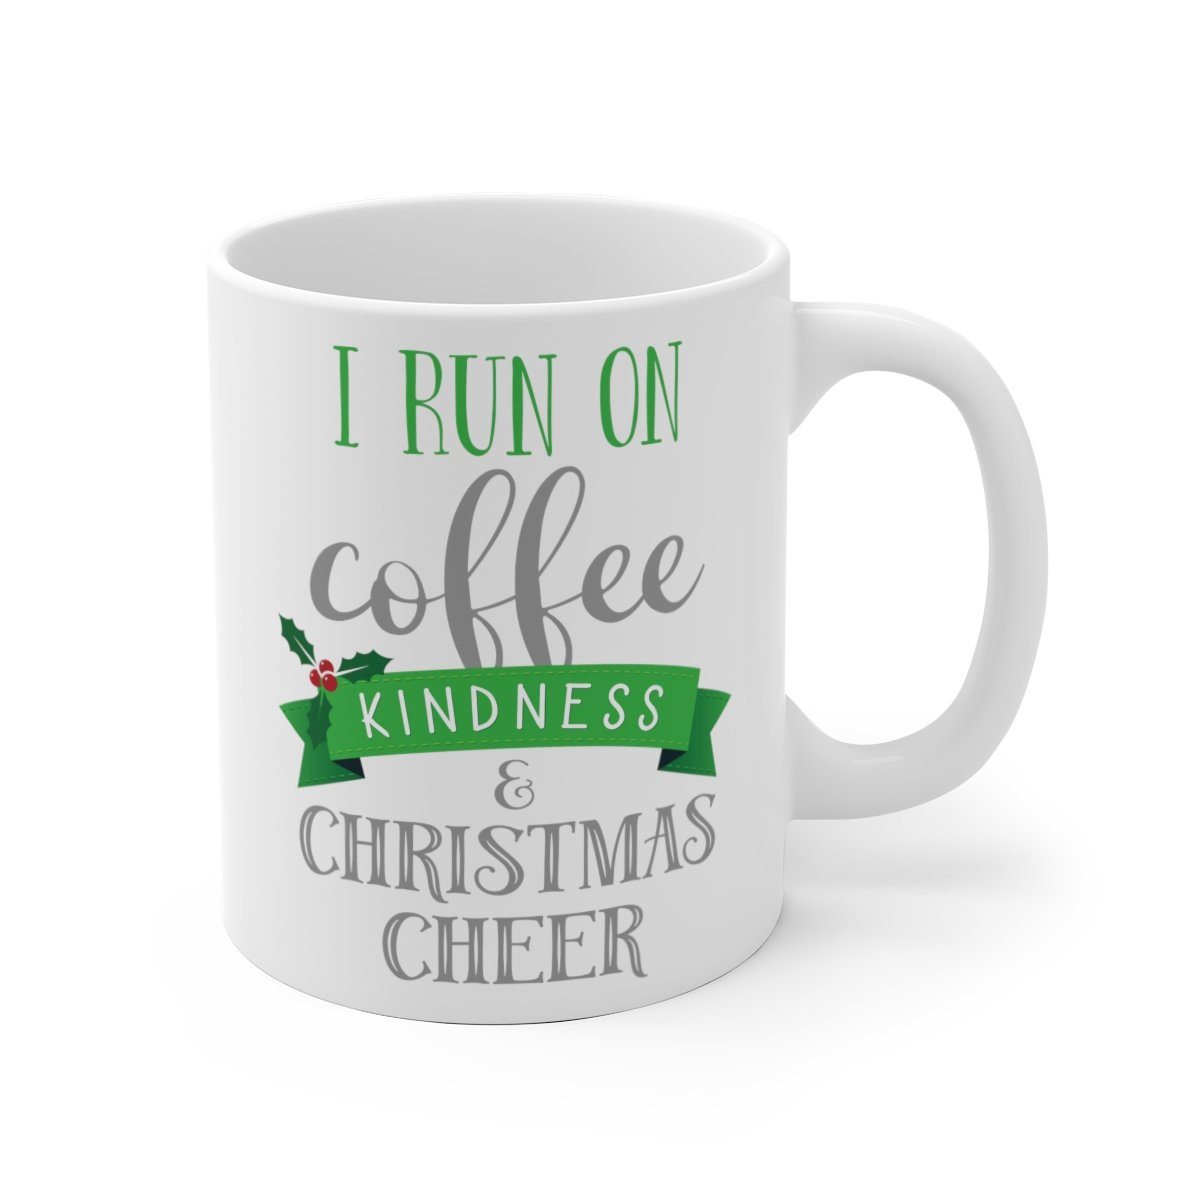 I Run on Coffee, Kindness & Christmas Cheer Coffee Mugs